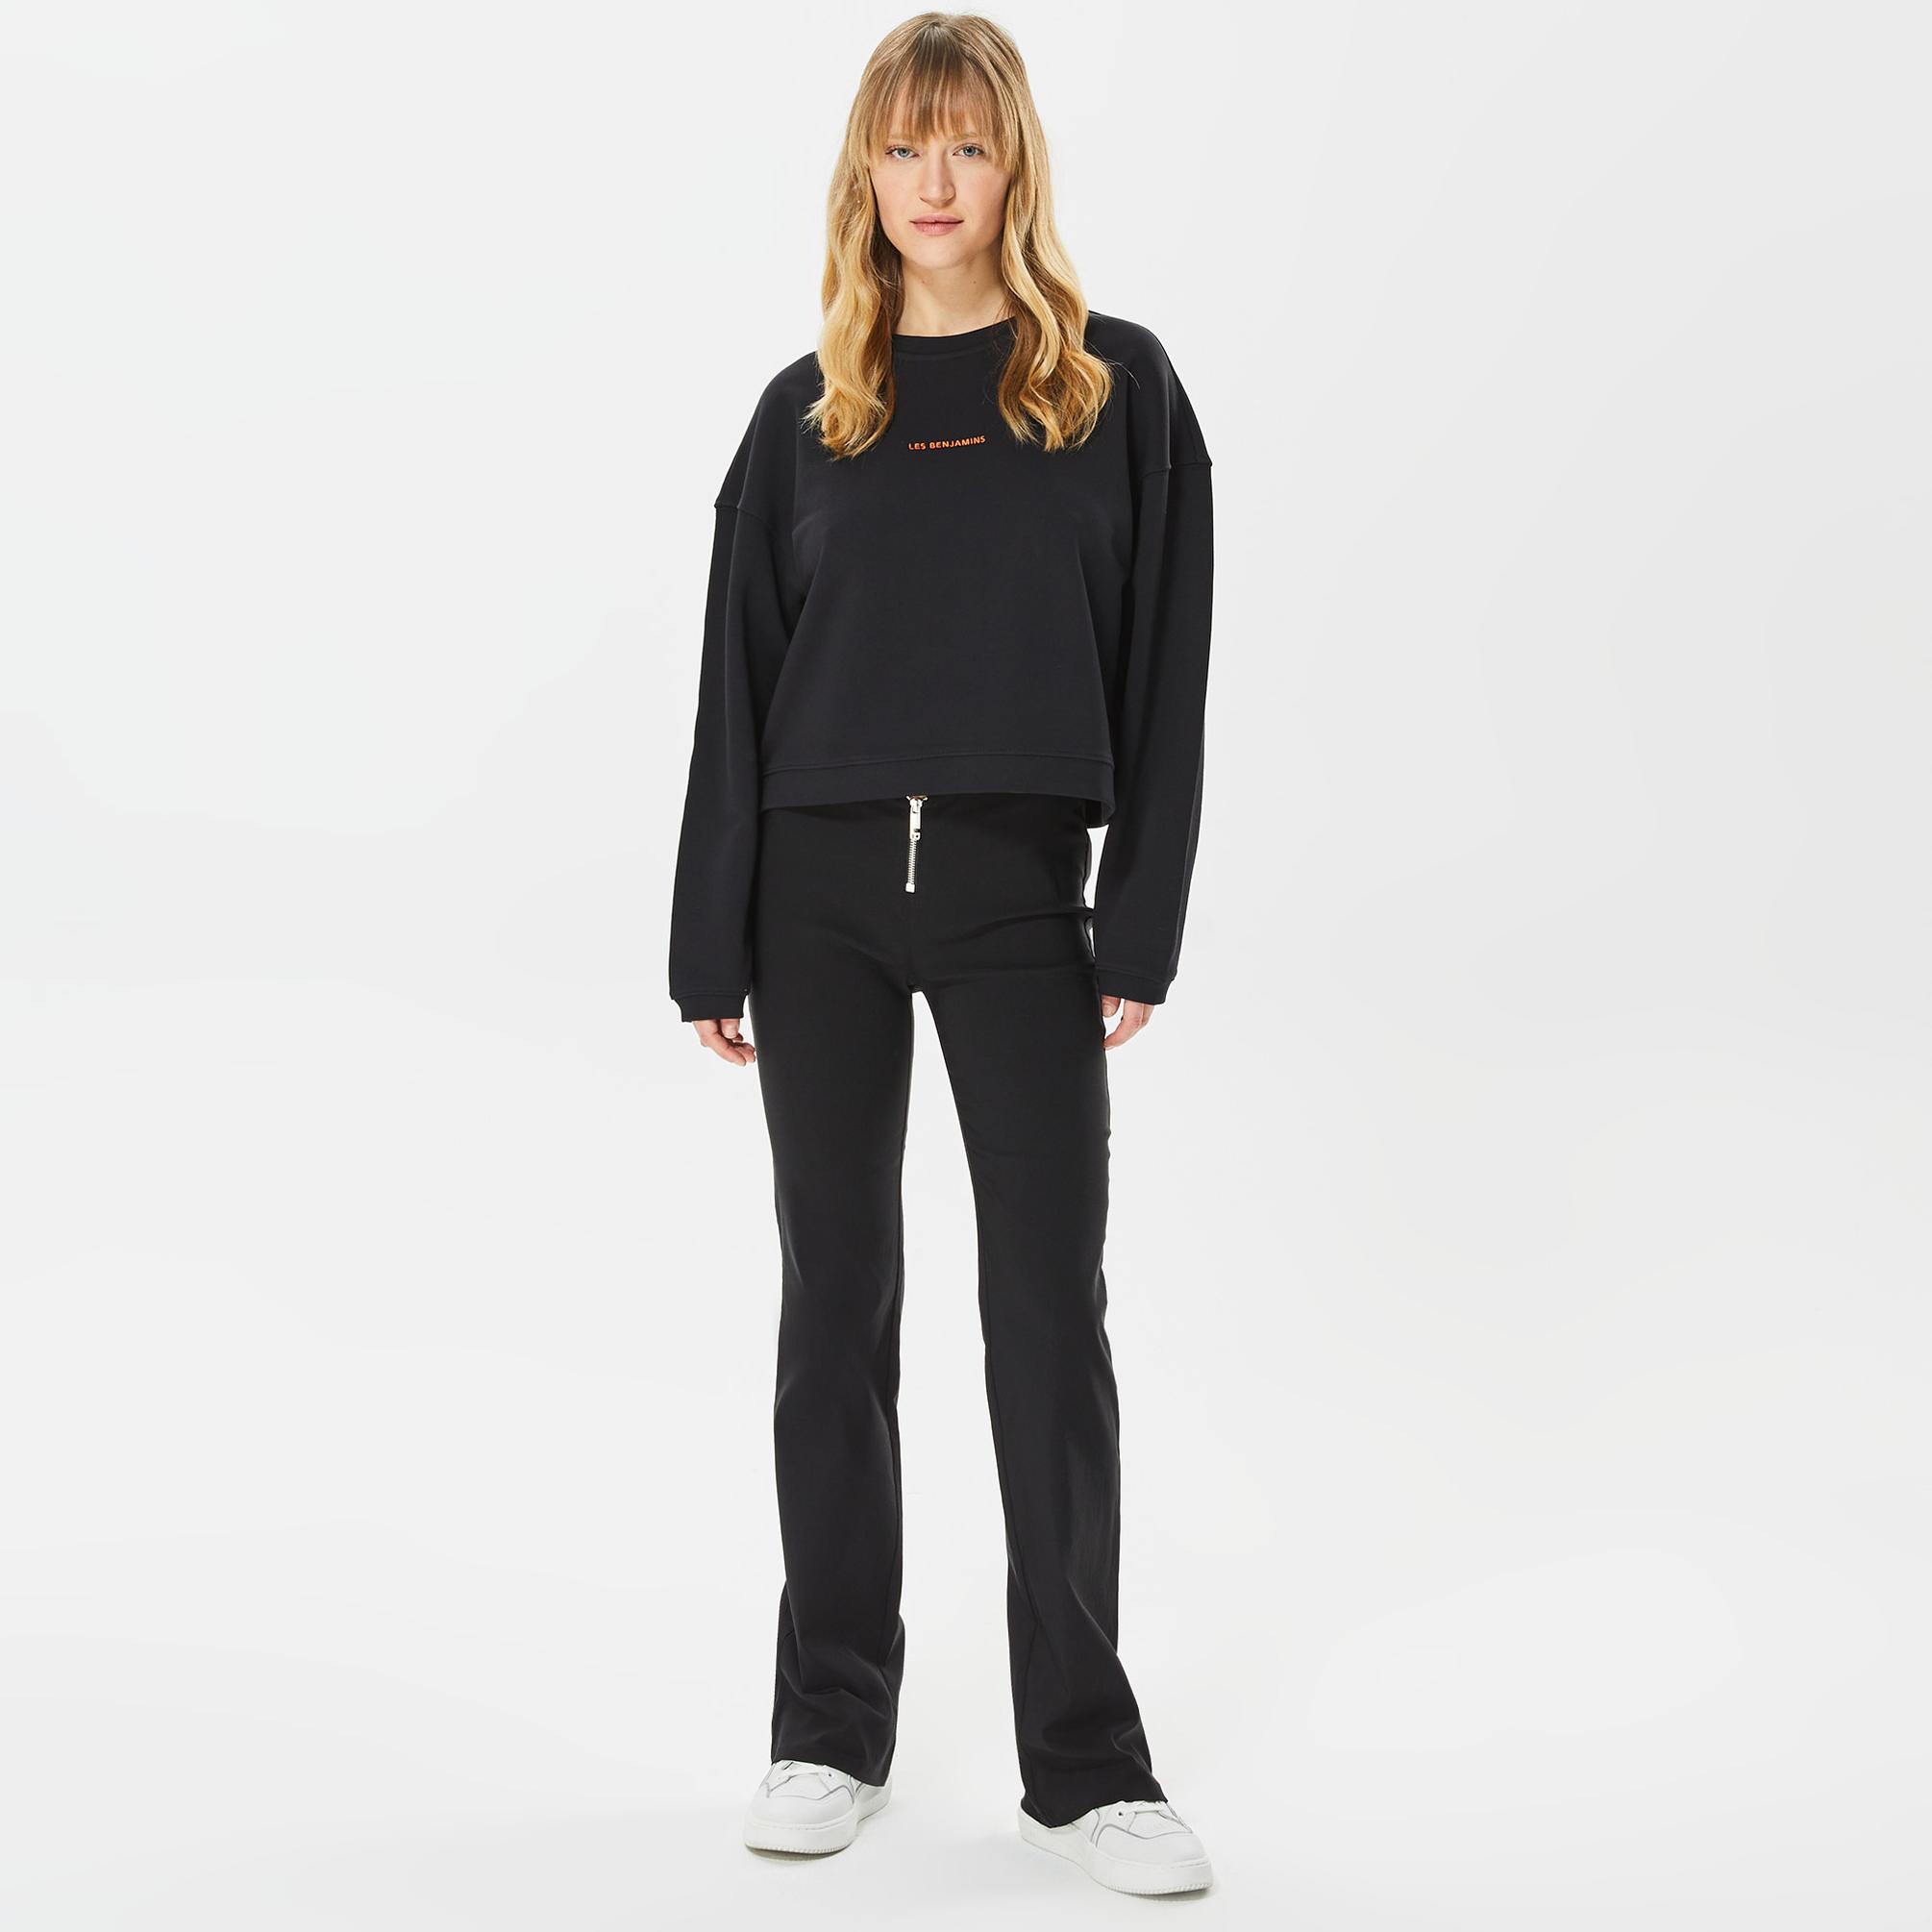  Les Benjamins Core Kadın Siyah Sweatshirt